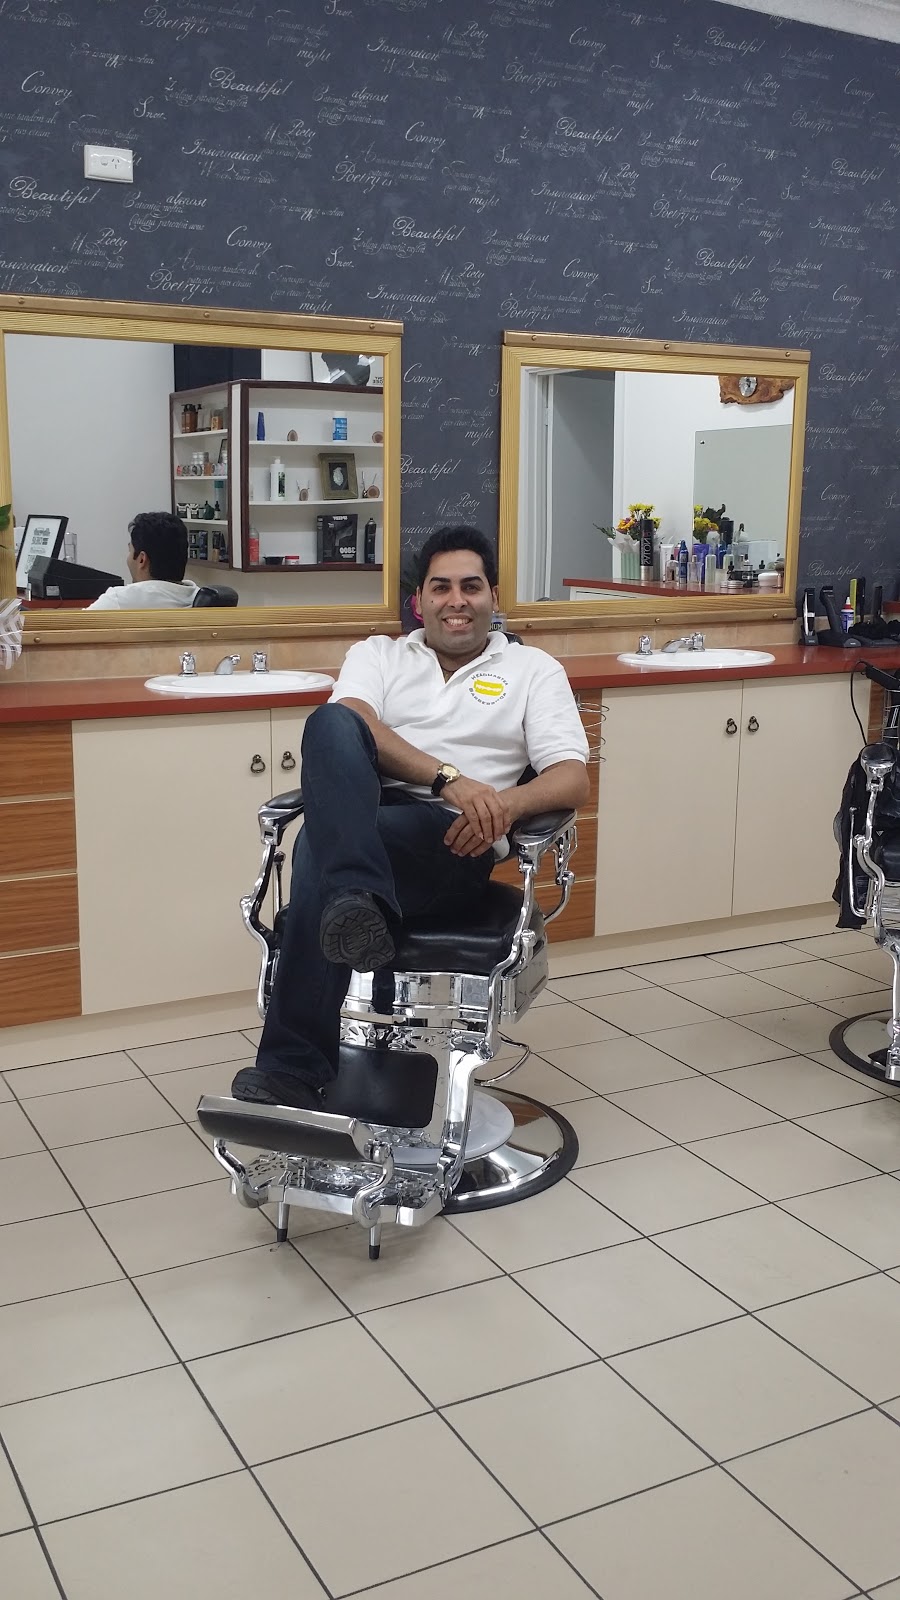 HeadMaster Barbershop | hair care | 1504 Main S Rd, Darlington SA 5047, Australia | 82967915 OR +61 82967915